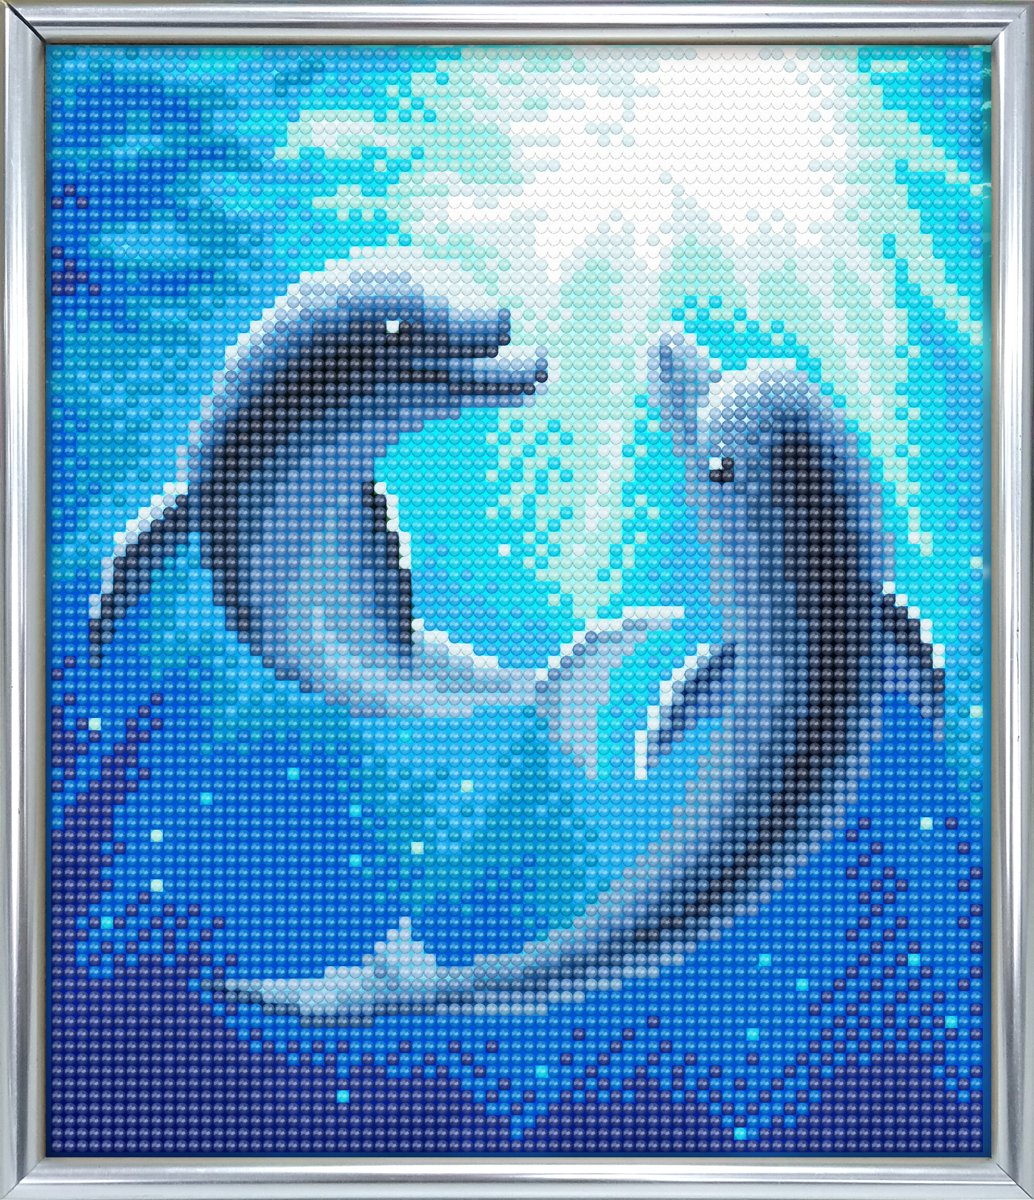 Diamond Painting Crystal Art Kit ® Dolphin Dance 21x25 cm incl. zilveren frame met standaard, full painting portait